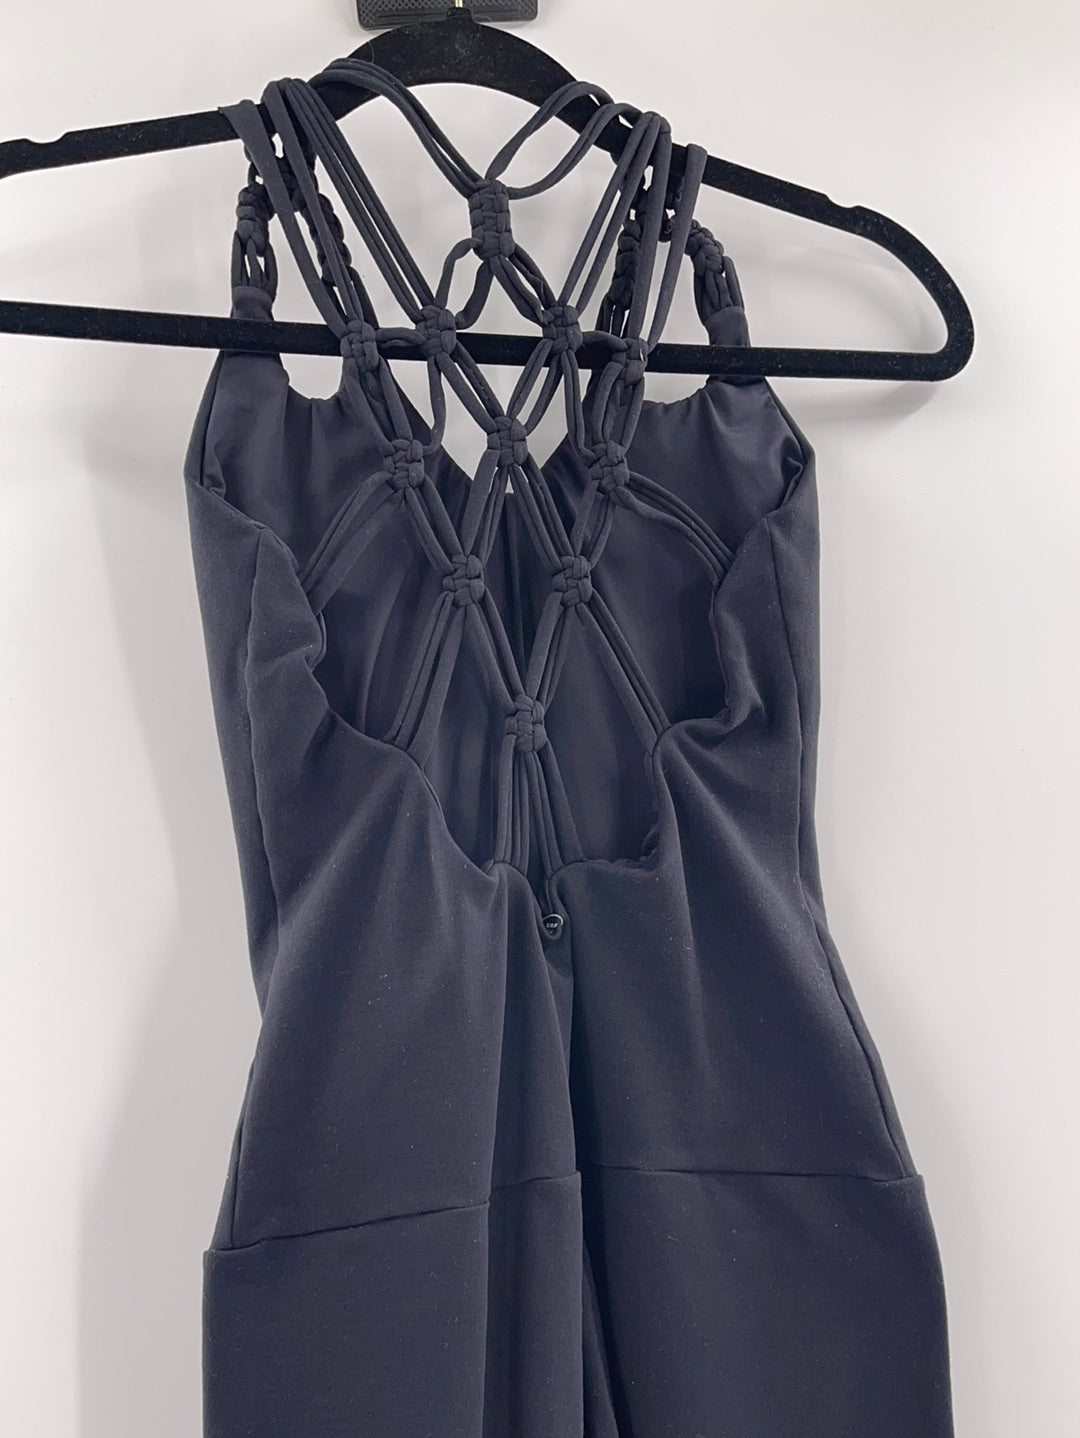 Mika Yogawear - Black Bodysuit Jumpsuit (Size Small)